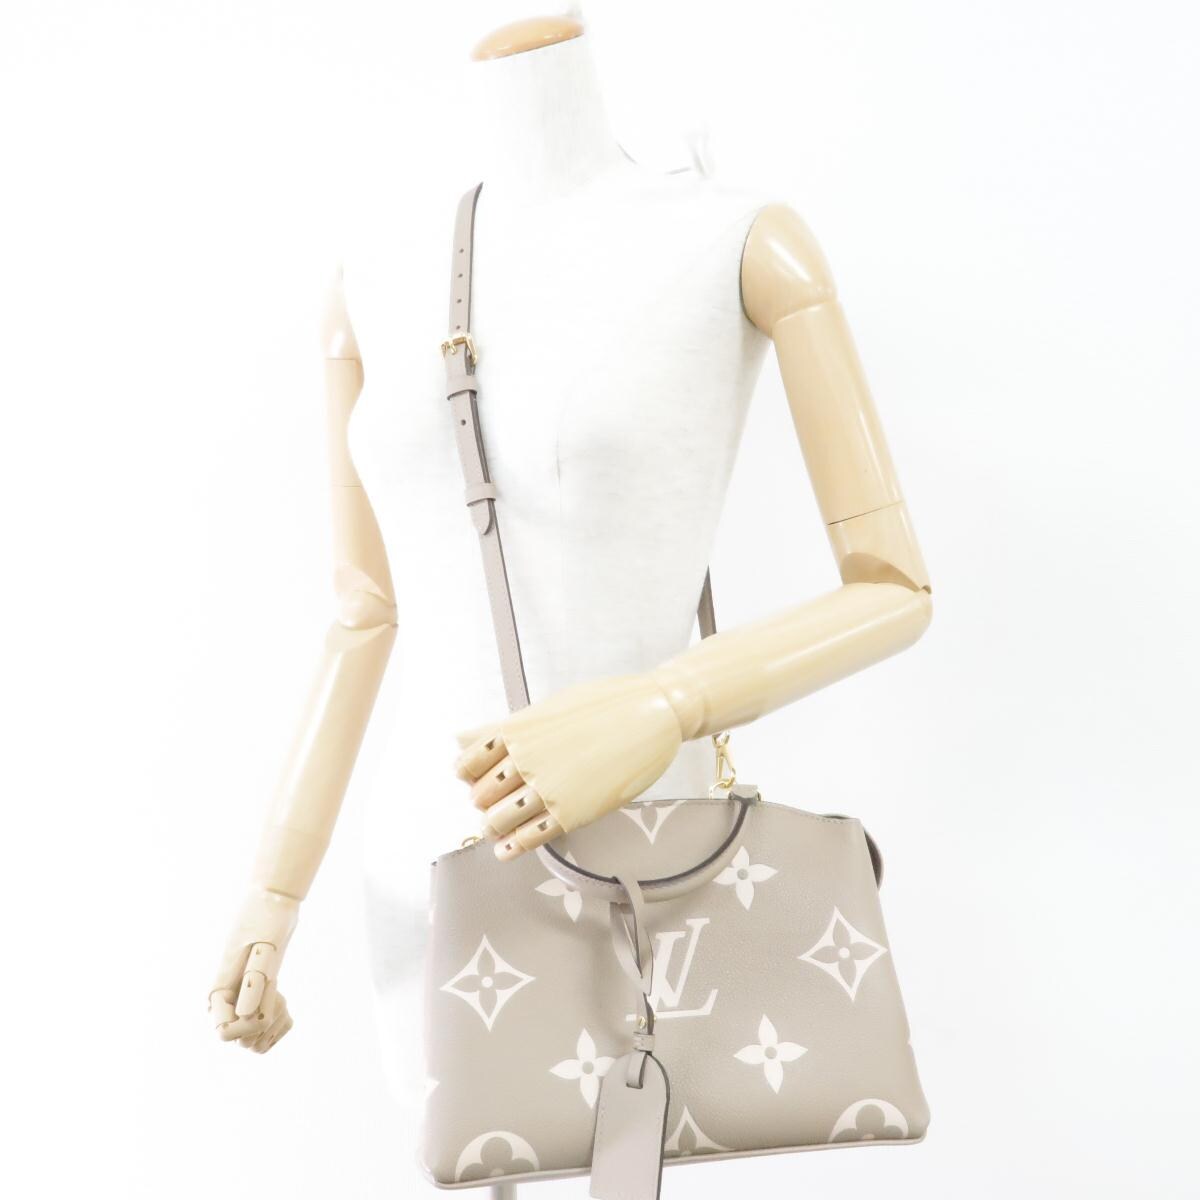 Petit Palais Bicolor Monogram Empreinte Leather - Handbags